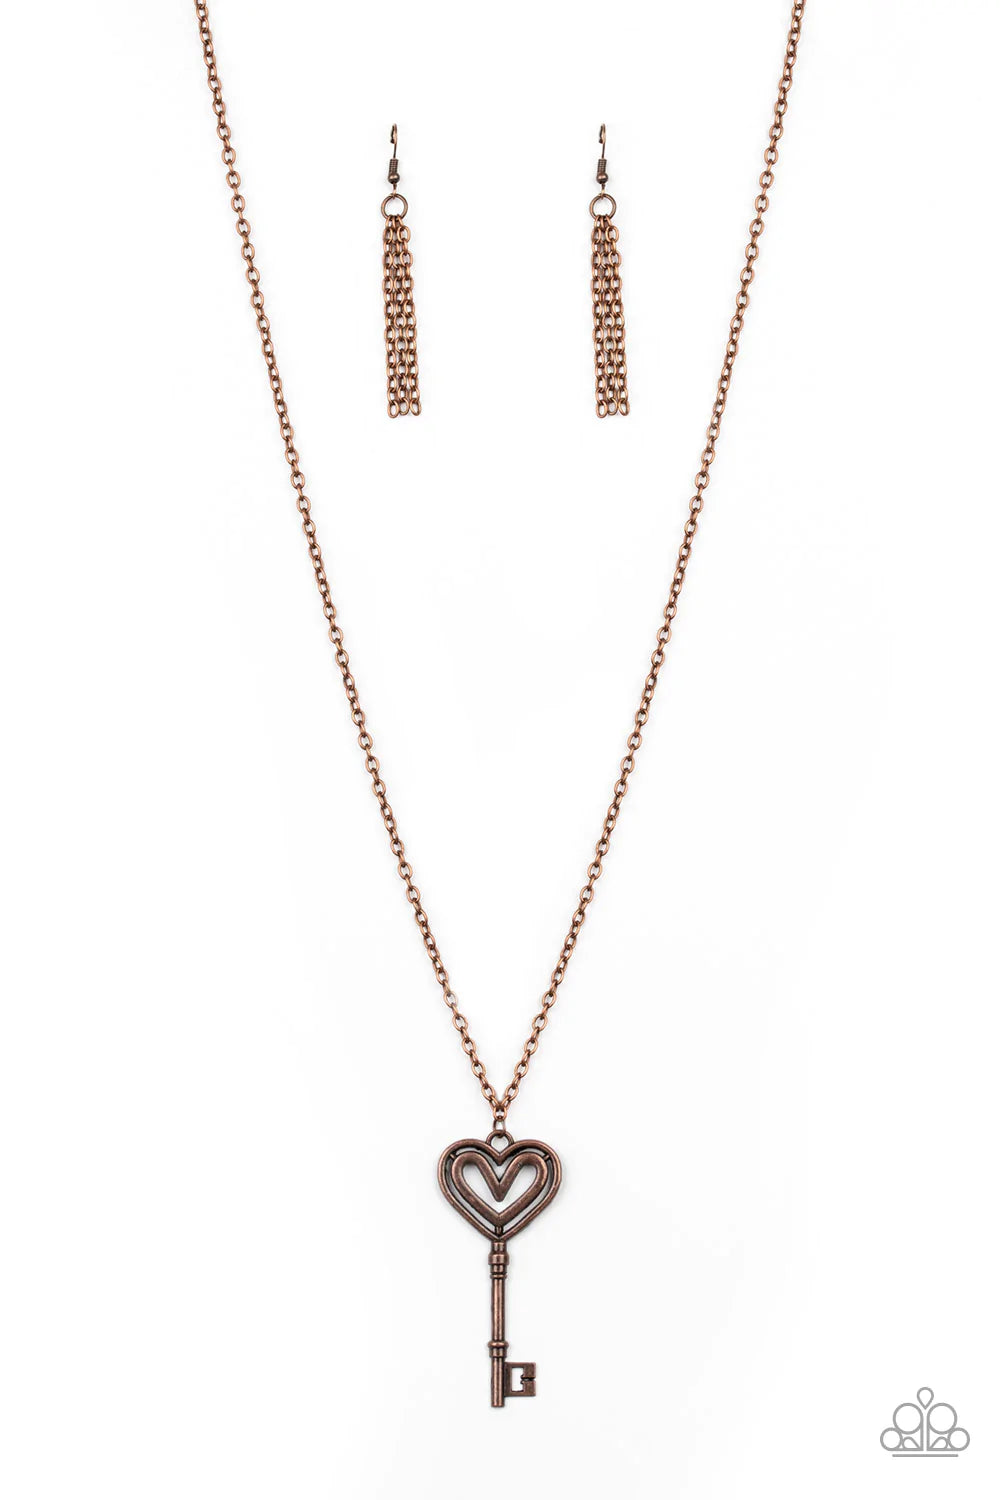 Paparazzi Necklace ~ Unlock My Heart - Copper